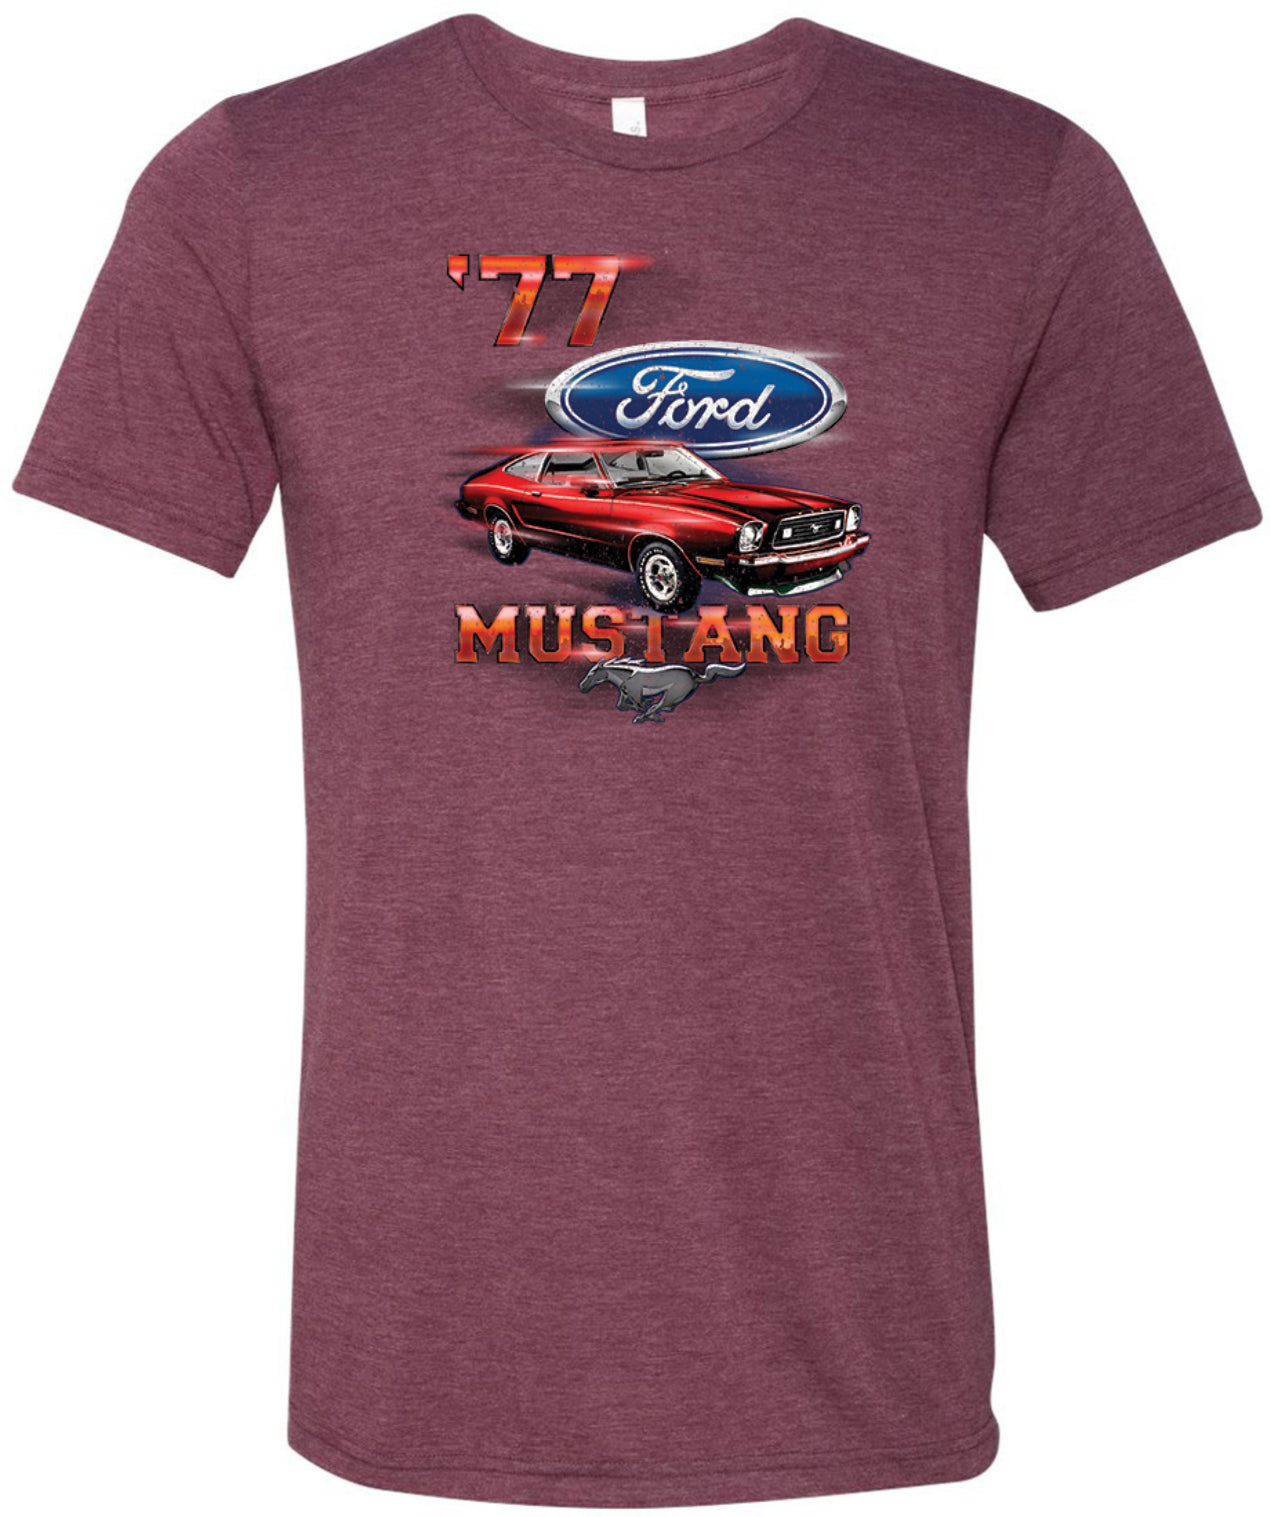 Ford T-shirt 1977 Mustang Tri Blend Tee